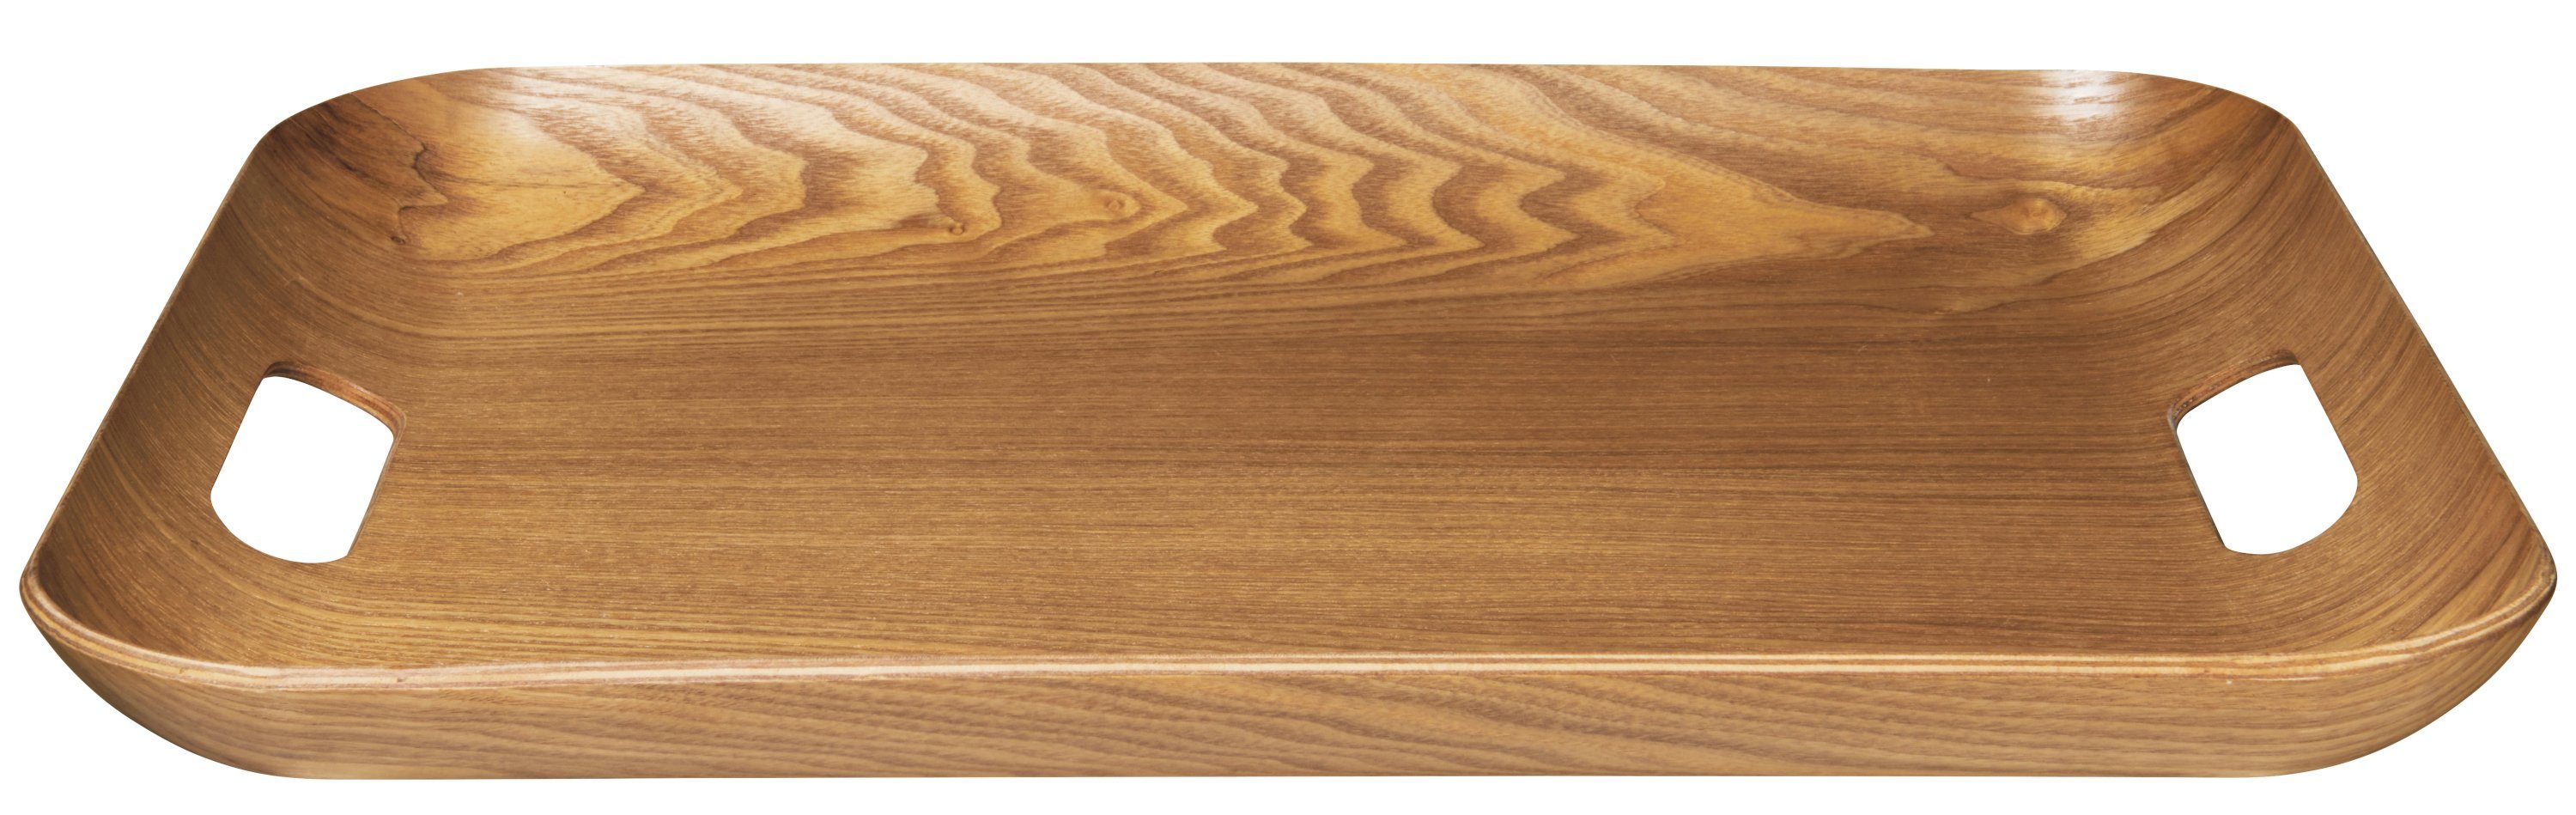 cm, wood SELECTION x ASA 36 Rechteckig Weidenholz Tablett 45